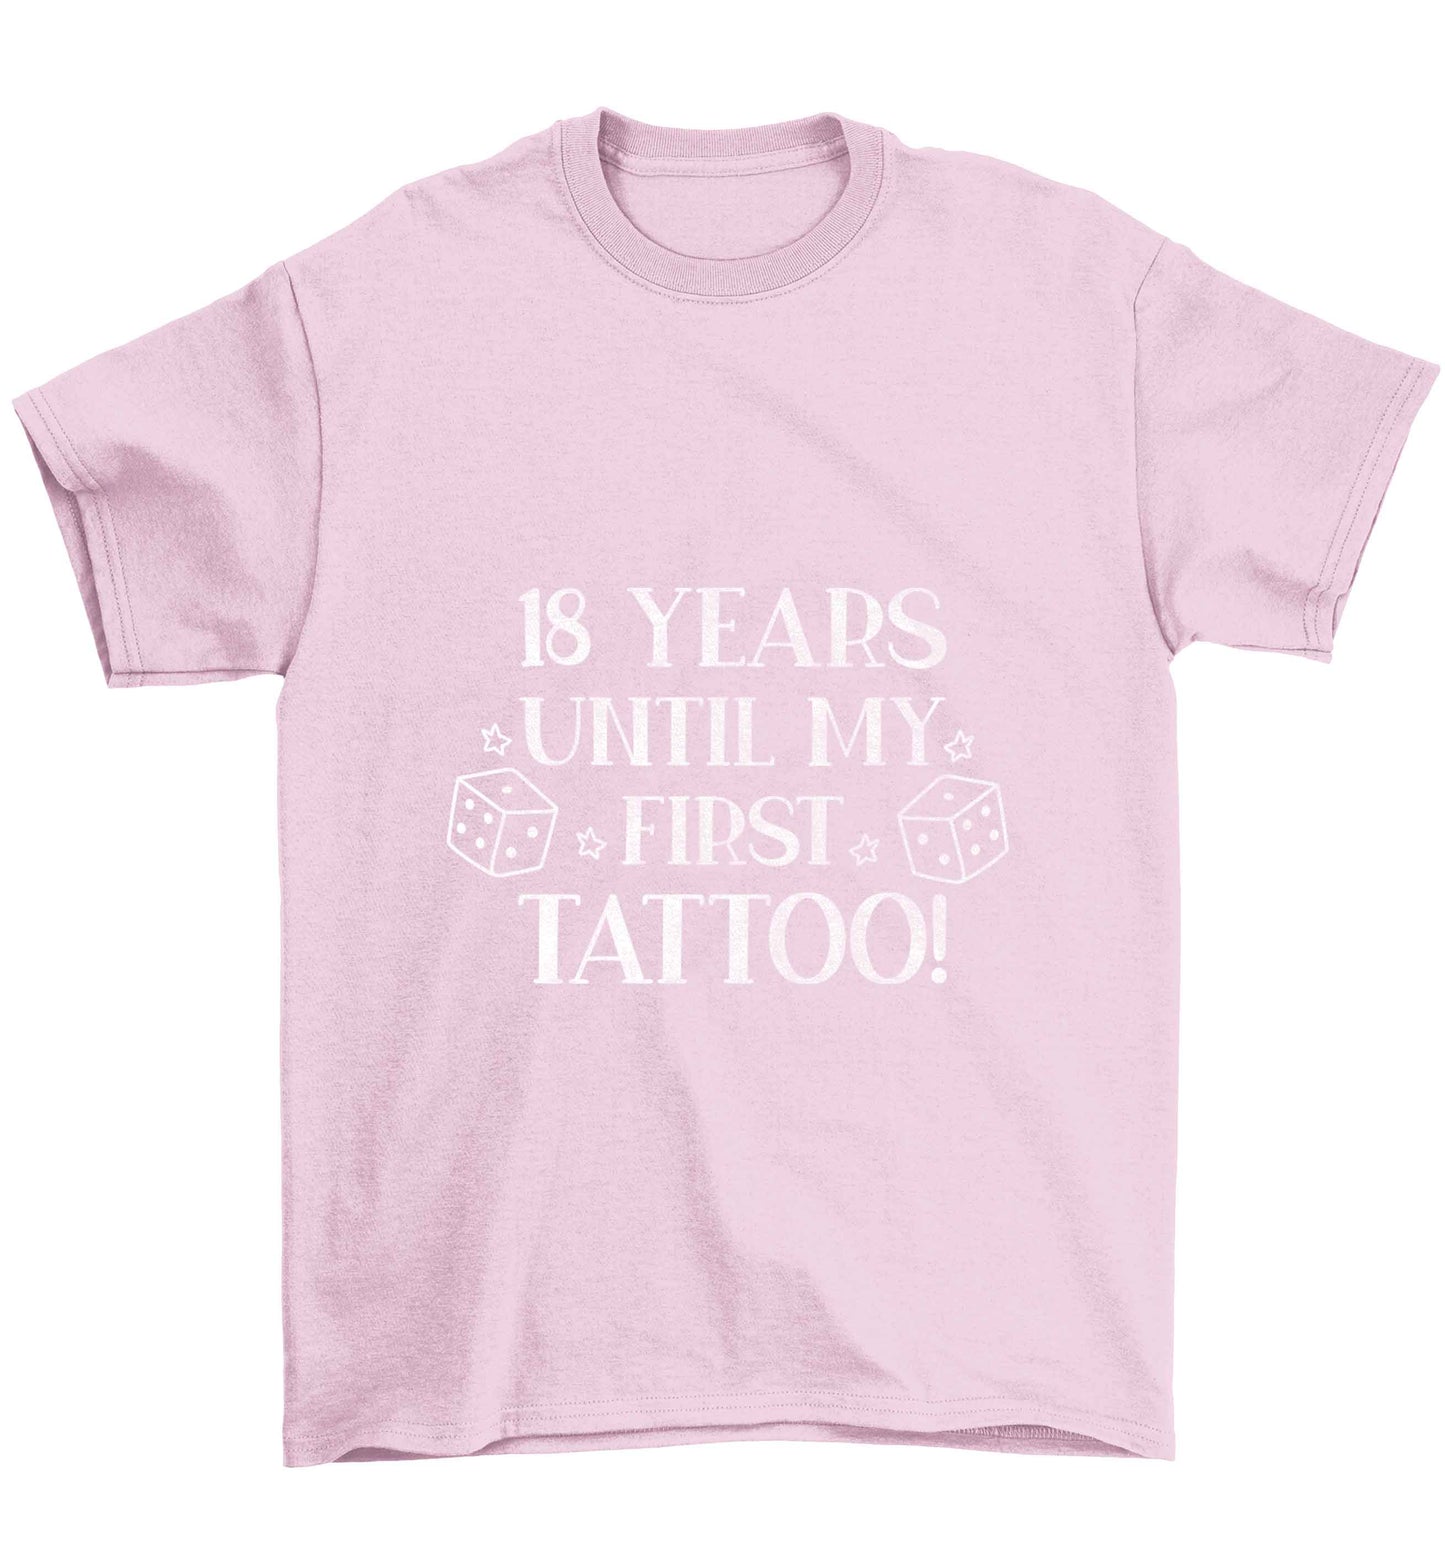 18 Years Until my First Tattoo Children's light pink Tshirt 12-13 Years